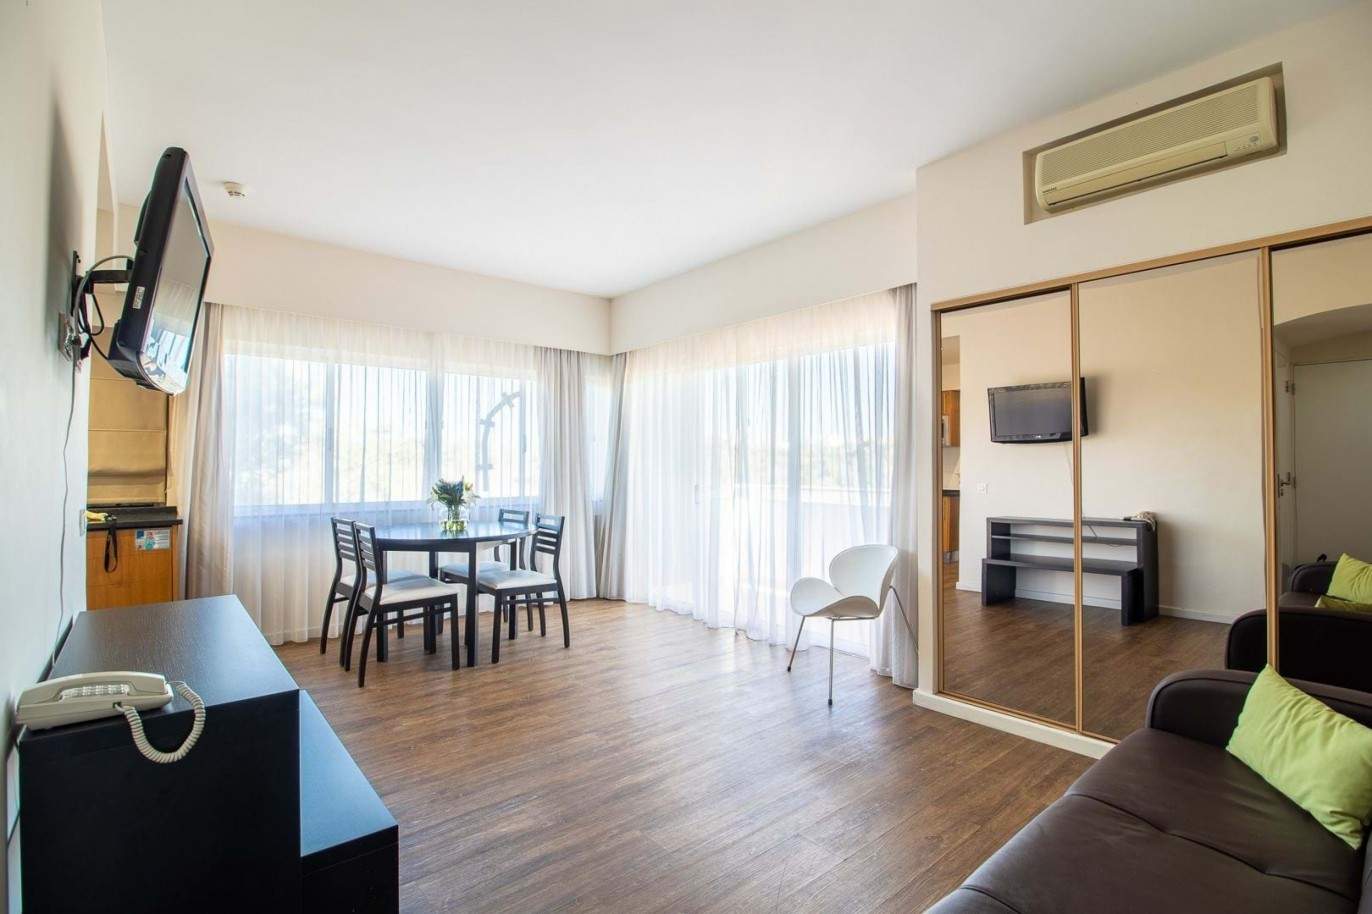 1 bedroom apartment in Alvor beach, for sale, Algarve_203070